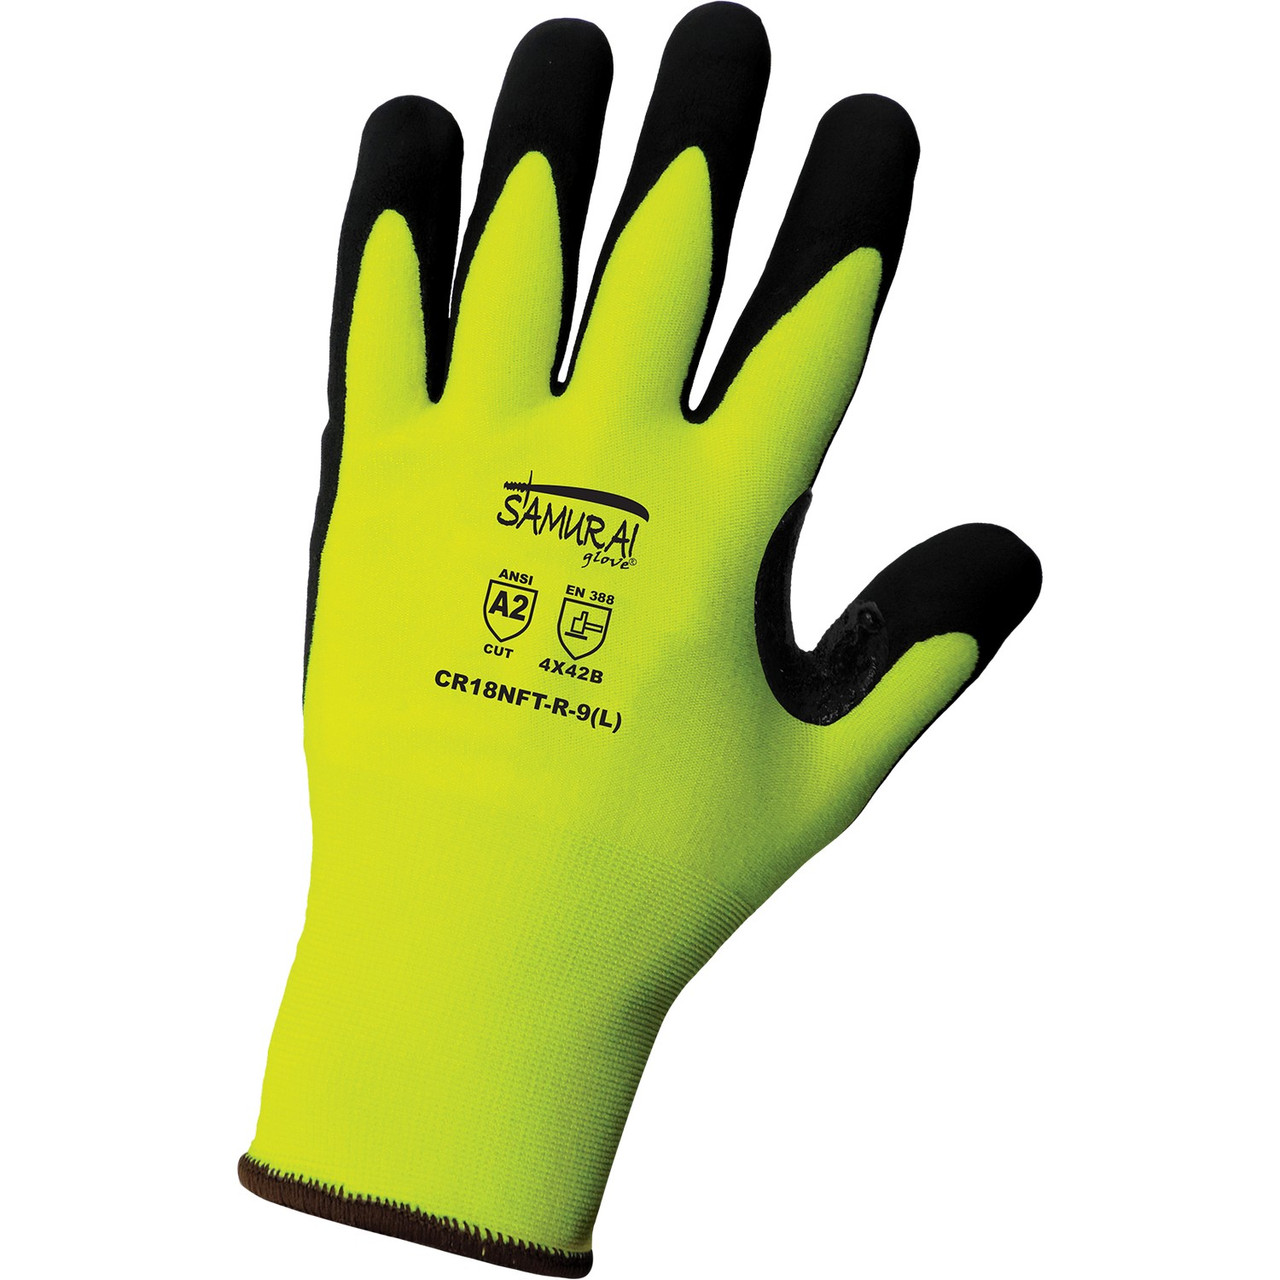 Global Glove CR18NFT-R - Samurai Glove High-Visibility Coated Gloves ...